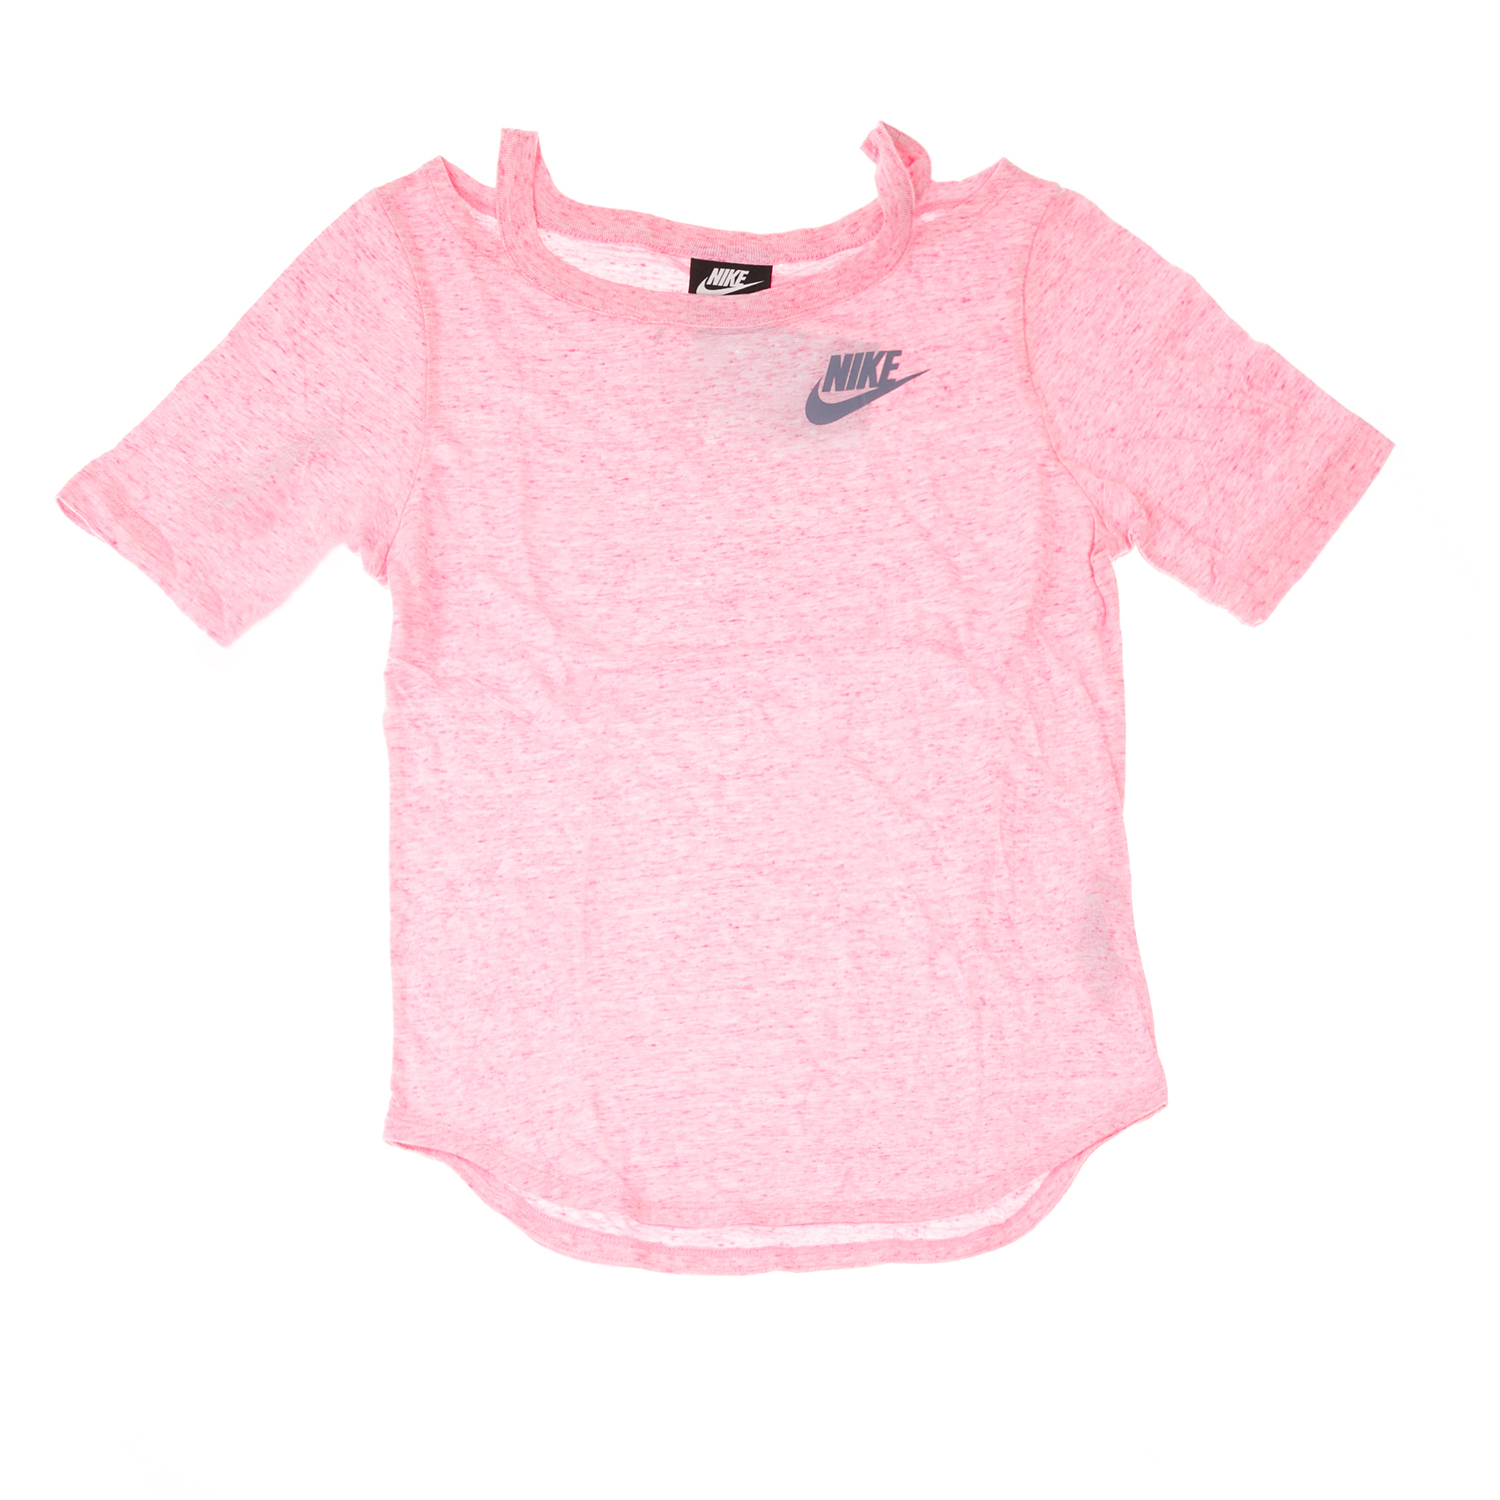 NIKE - Παιδική μπλούζα NIKE TOP SS ροζ Παιδικά/Girls/Ρούχα/Αθλητικά